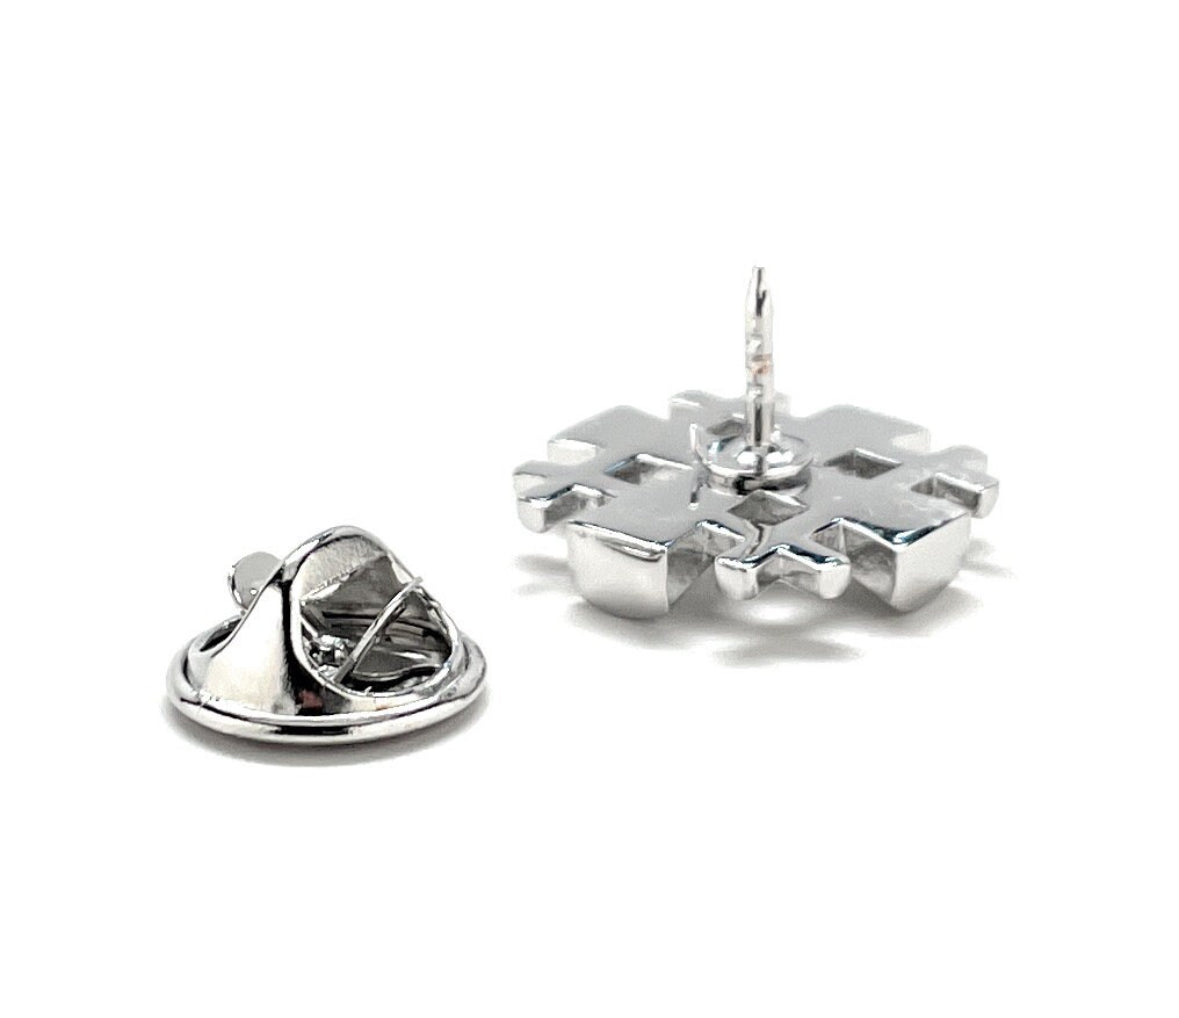 Jerusalem Cross Lapel Pin Crusaders Shield Cut Out Design Silver Tone 3D Five-Fold Cross Pin Tie Tack Lanyard Pins